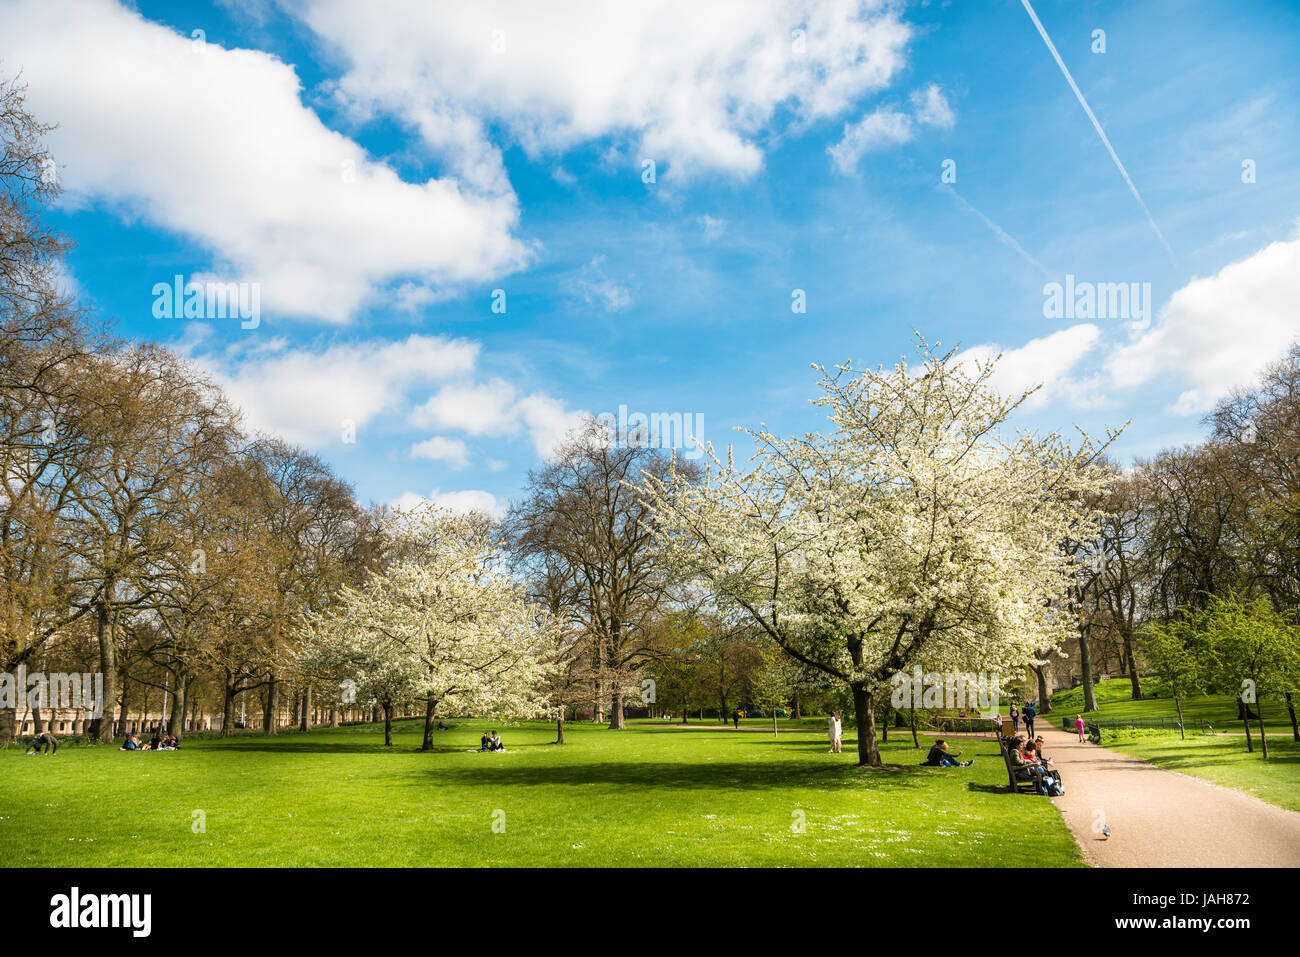 Flowering trees in spring, St James's Park, blue sky, municipal park, Westminster, London, England, United Kingdom Stock Photo